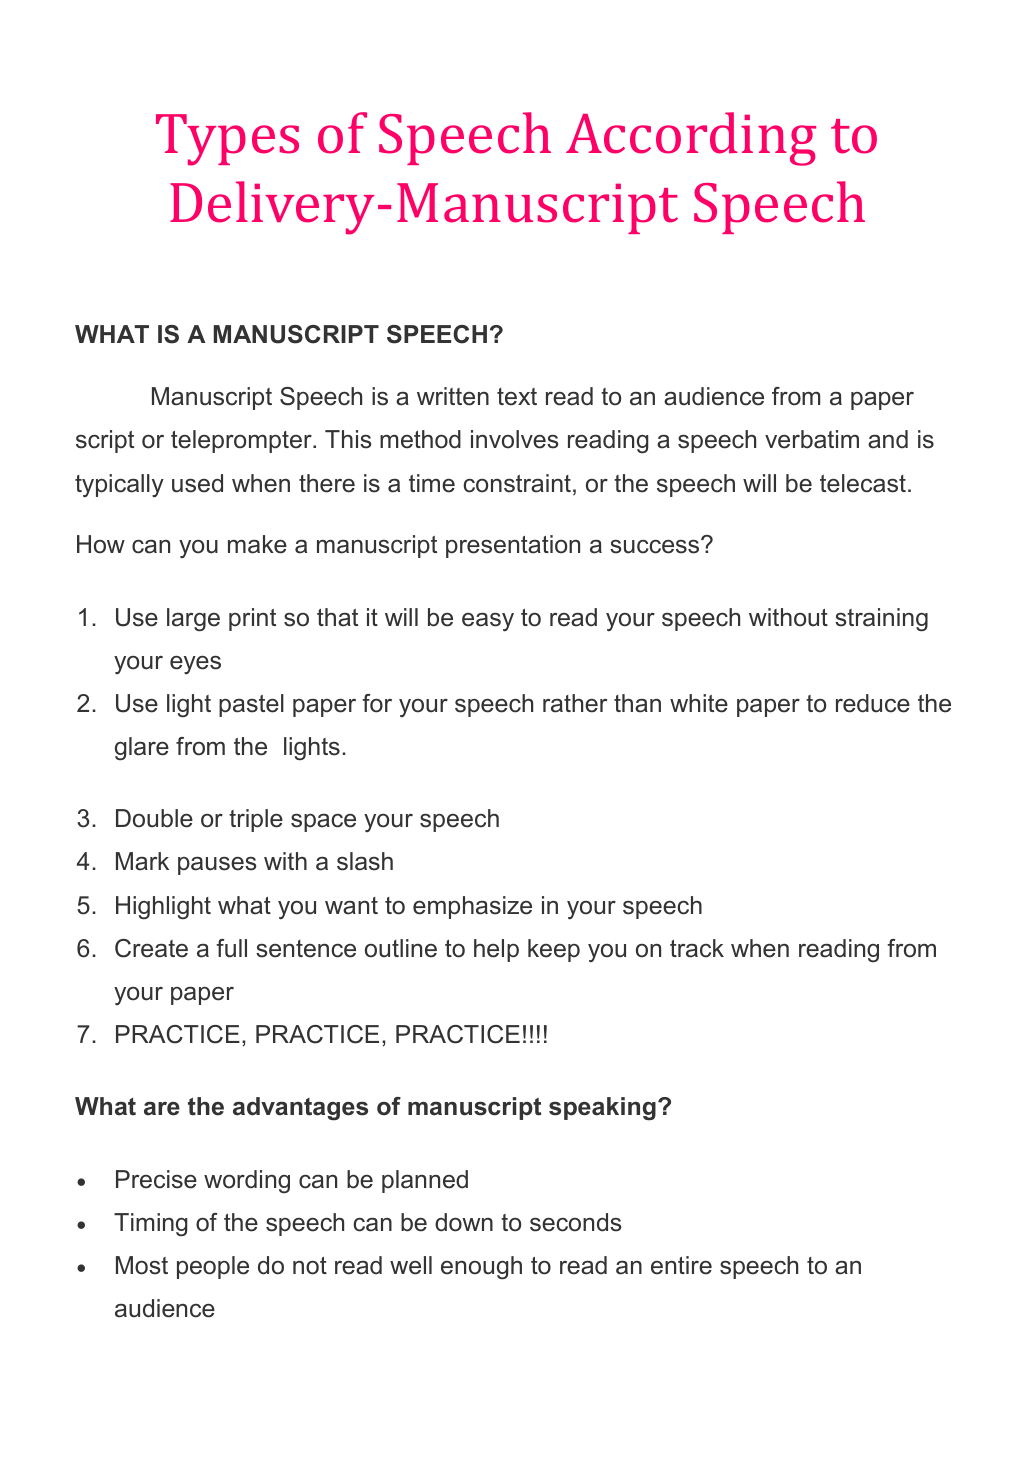 meaning of manuscript speech